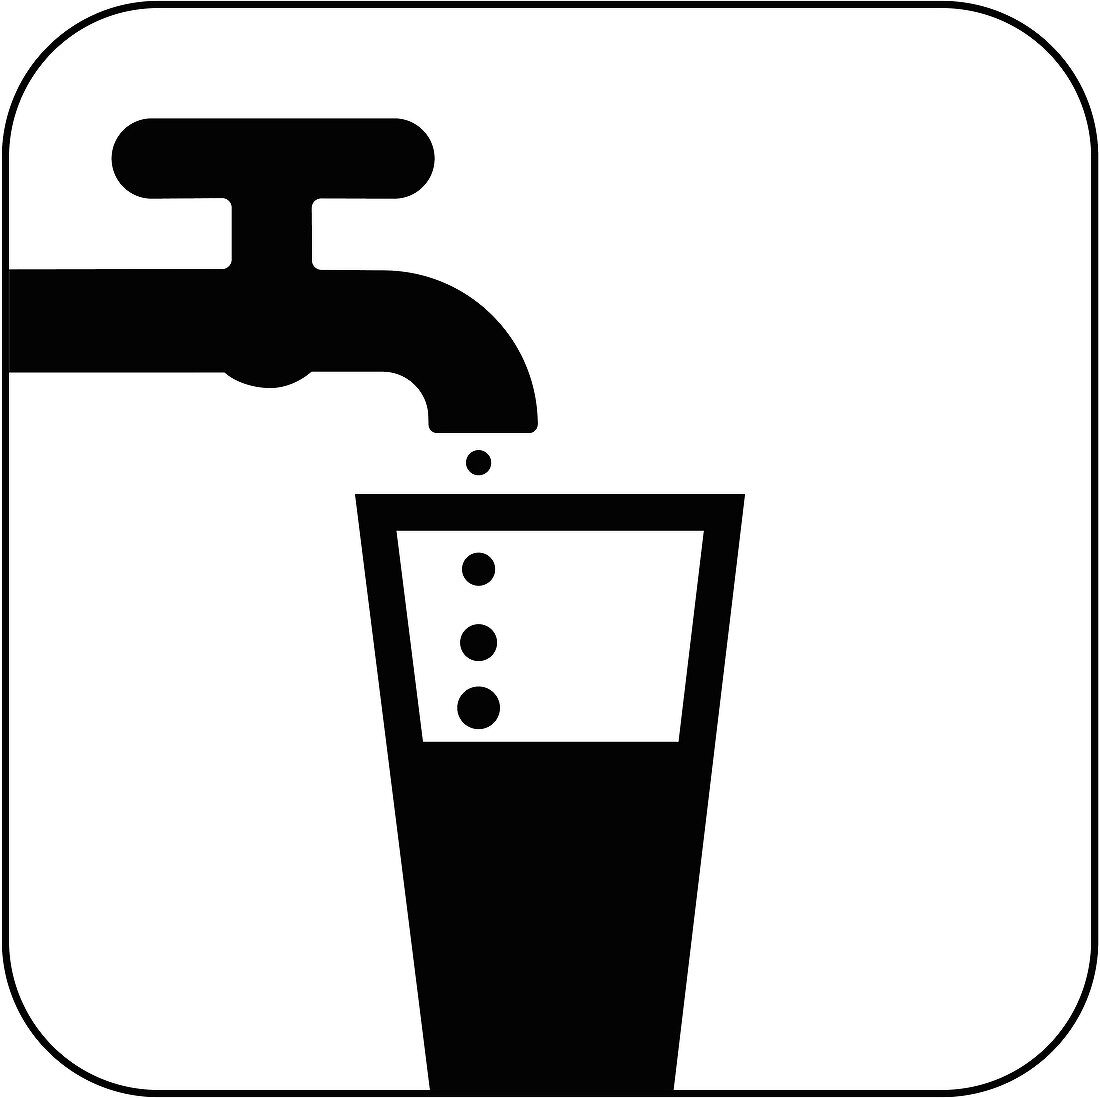 Drinking water symbol,artwork